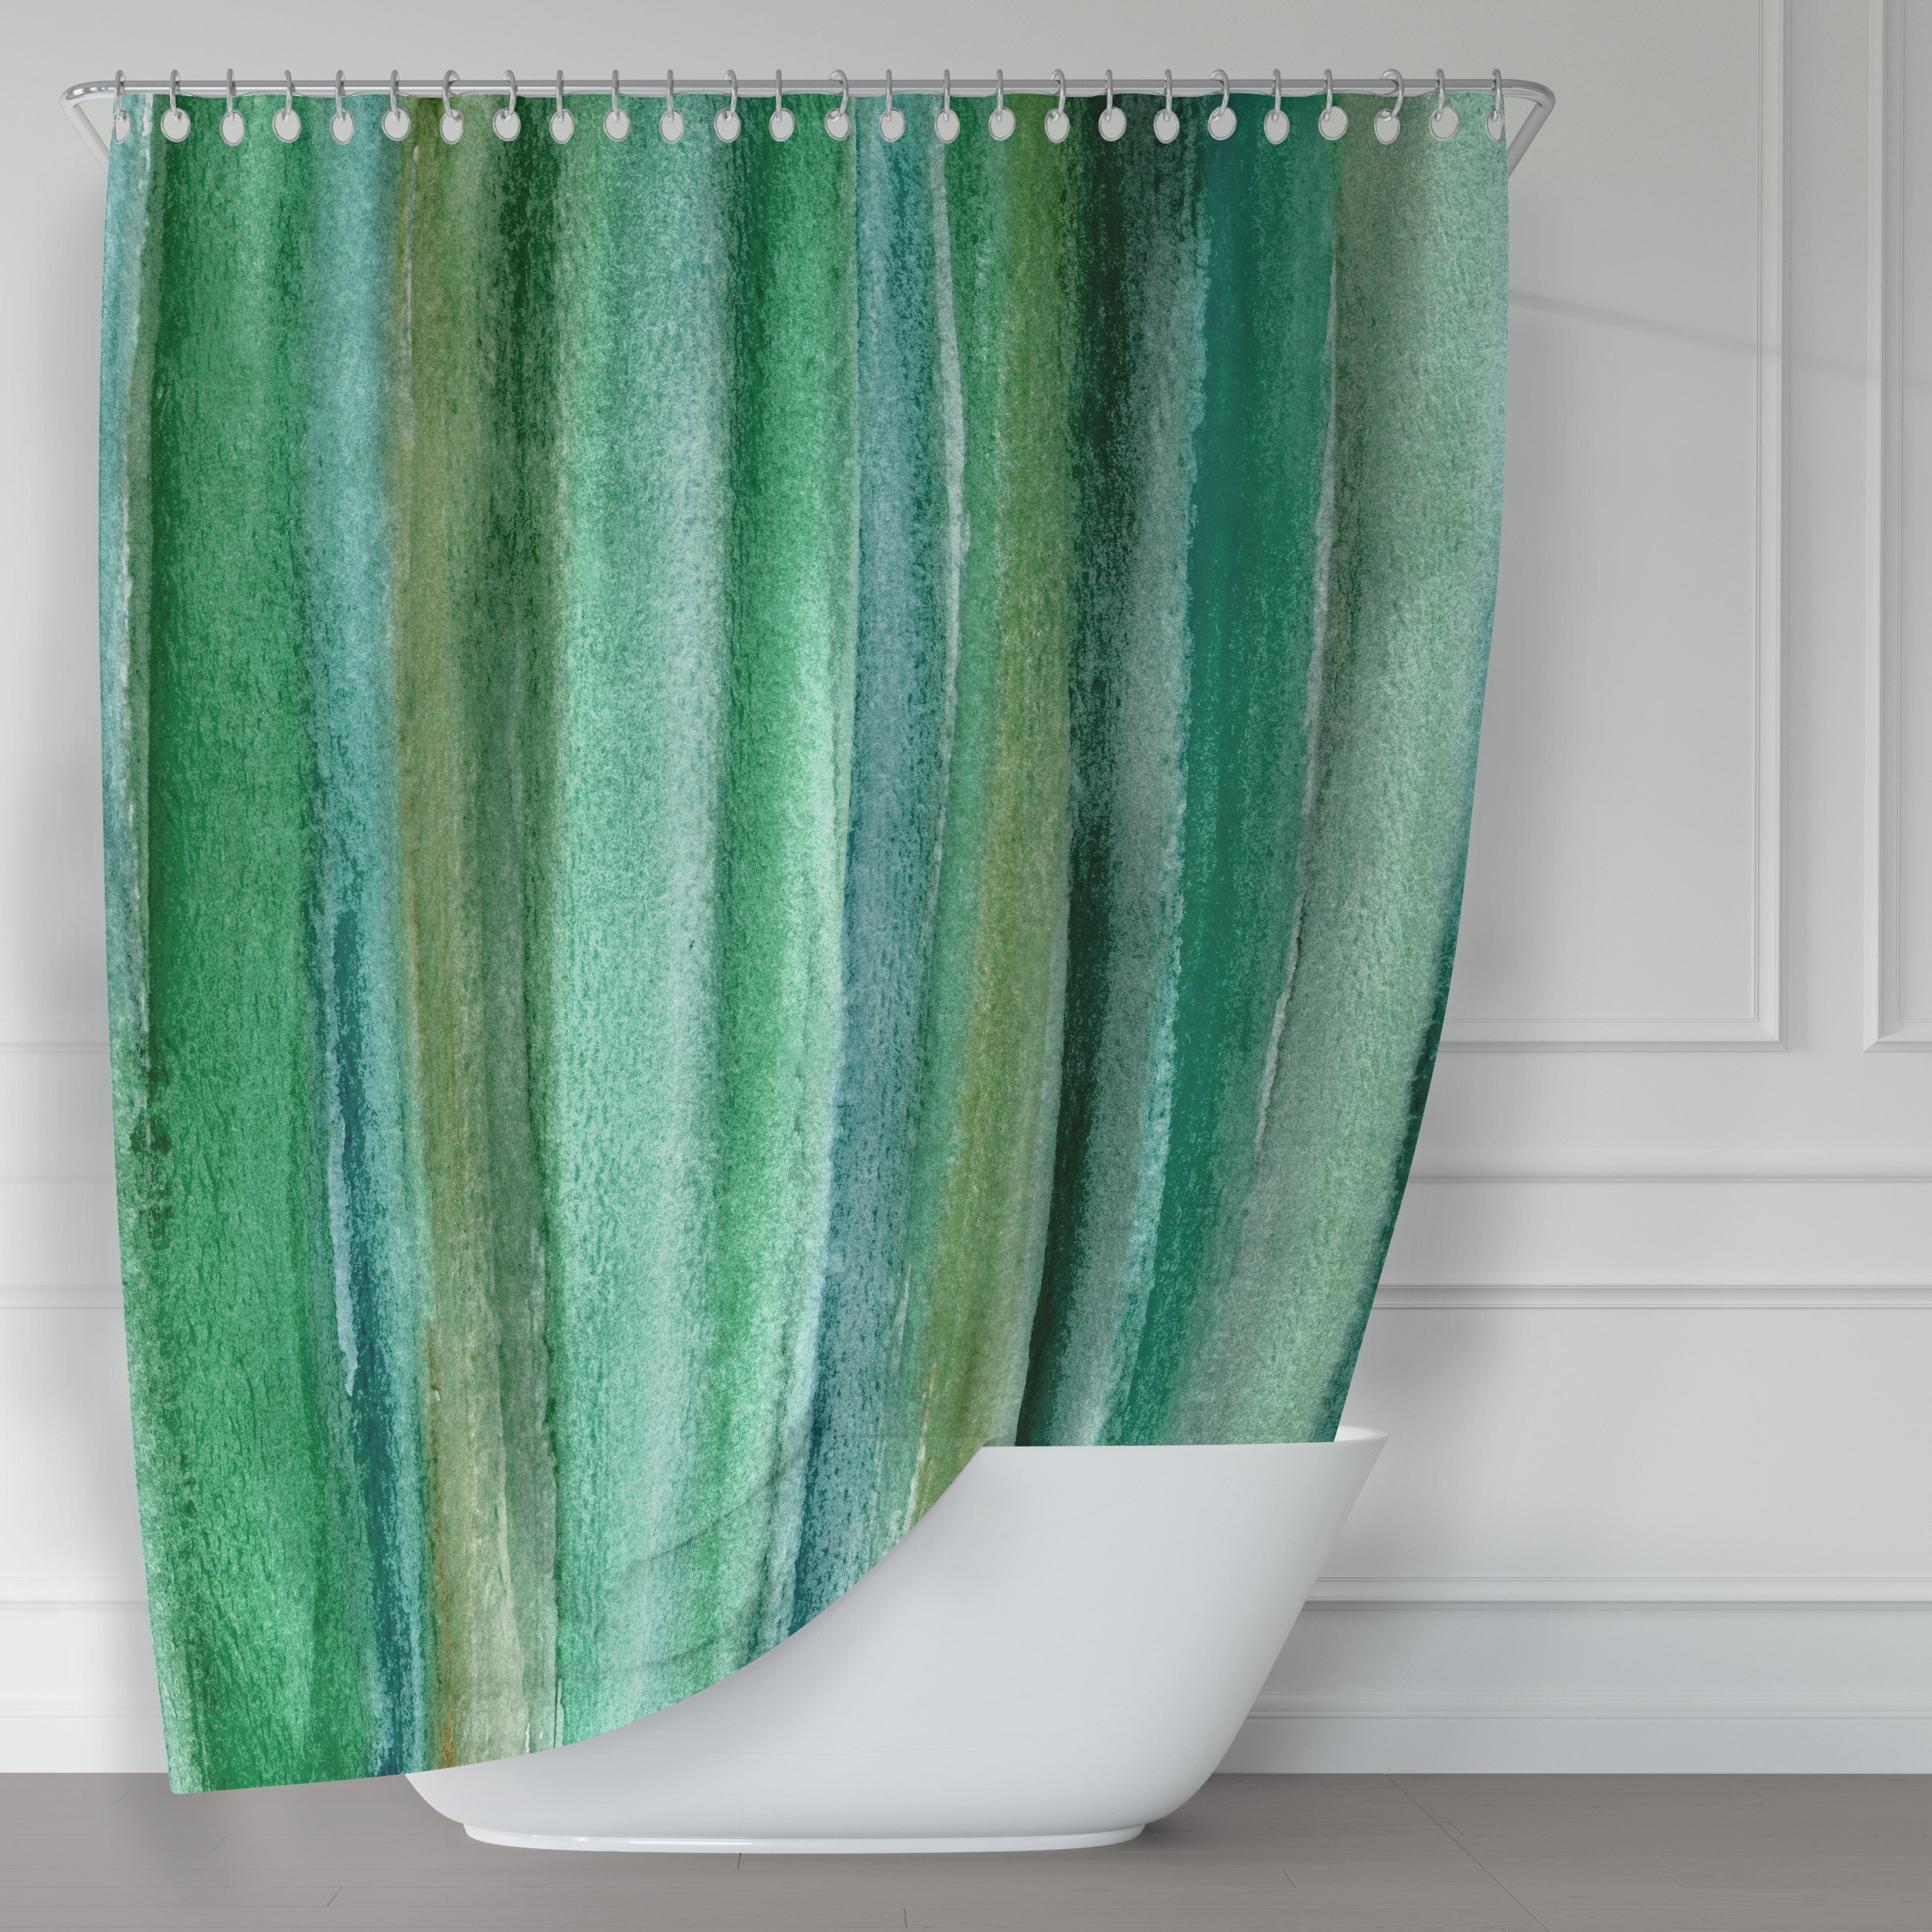 Green Folding Waterproof Bathroom Polyester Shower Curtain Liner Water Resistant 